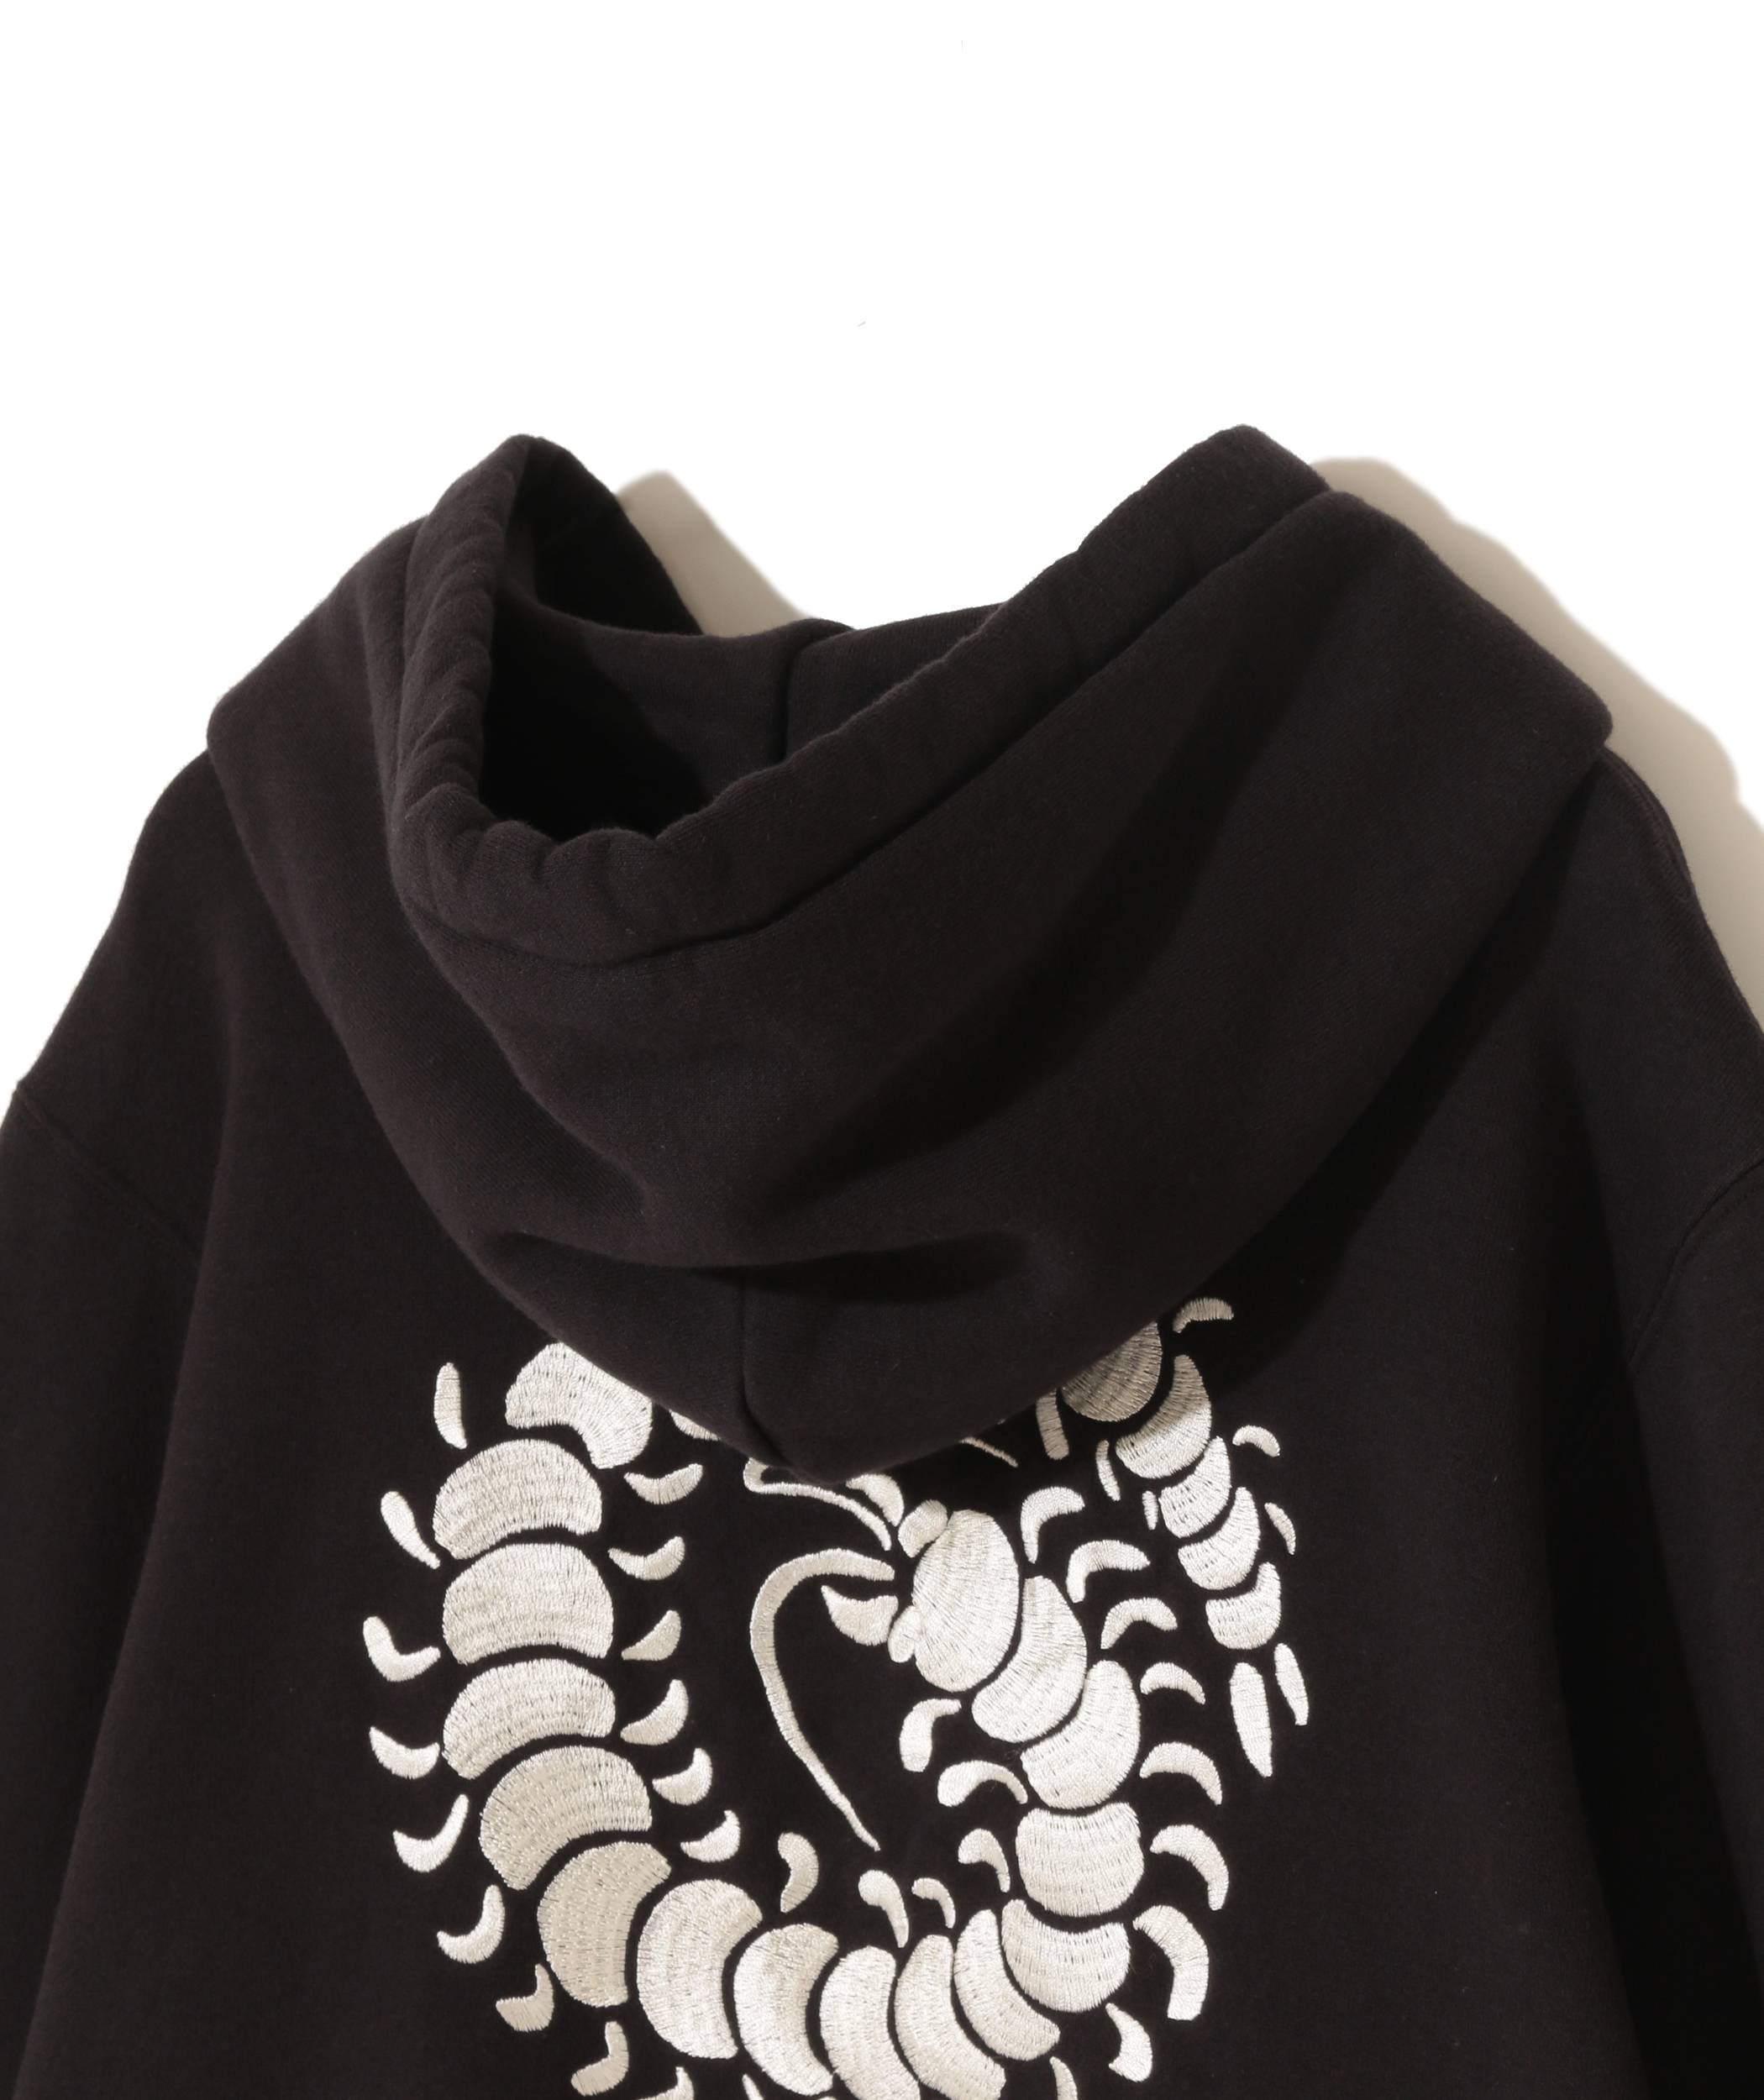 Selectshop FRAME - UNDERCOVER Throne of Blood Hoodie Sweatshirts Dubai